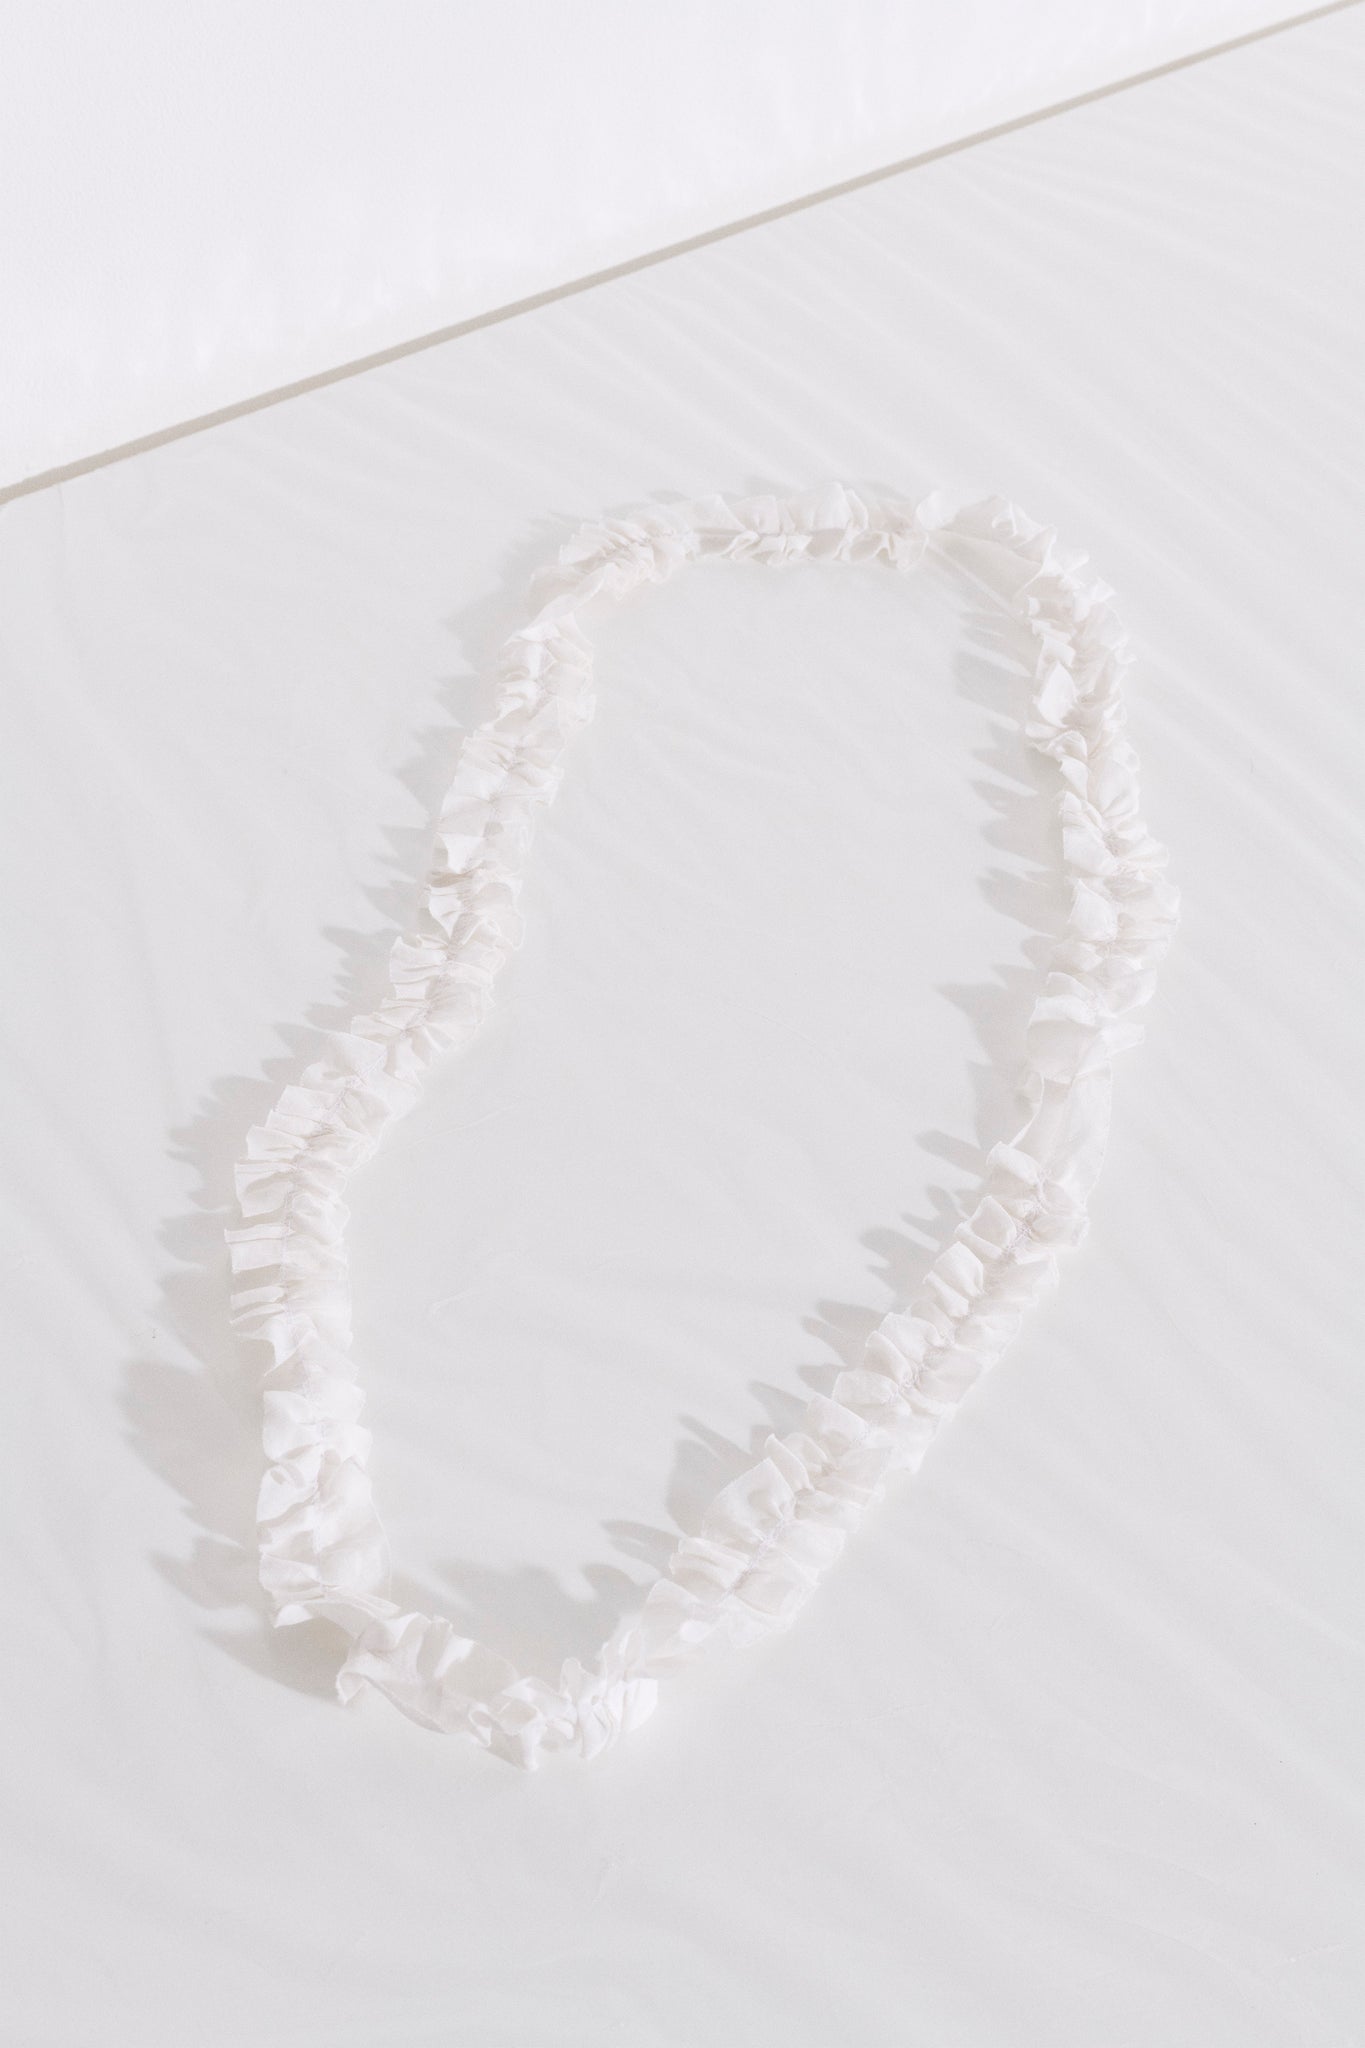 Aria, necklace, white